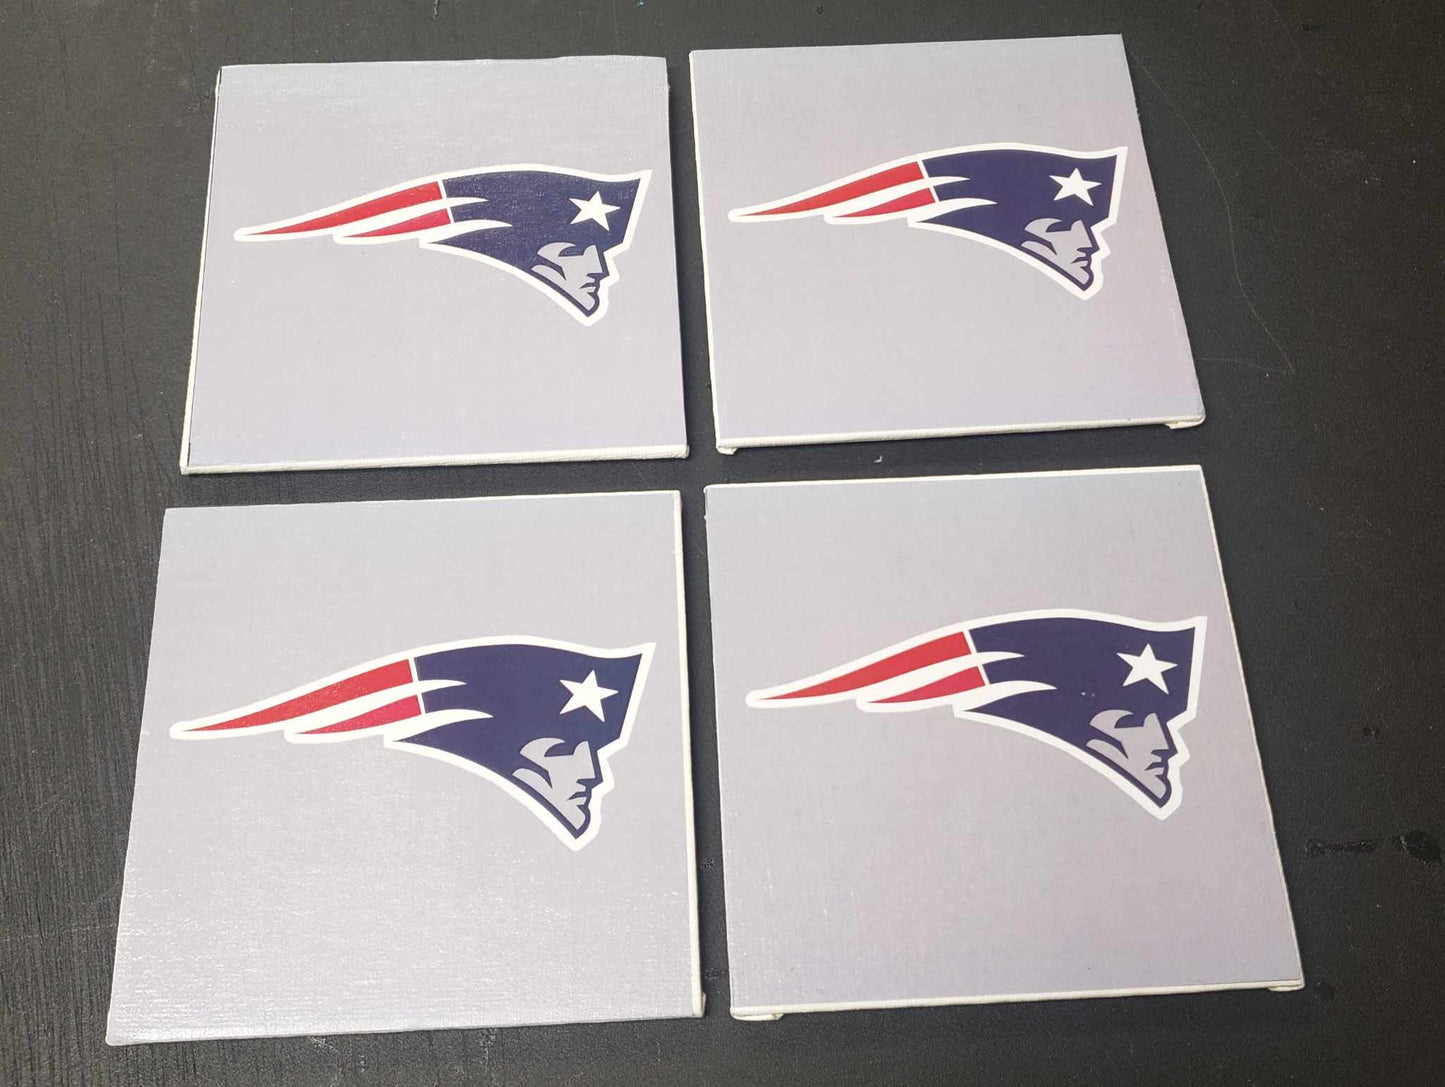 New England Patriots coasters